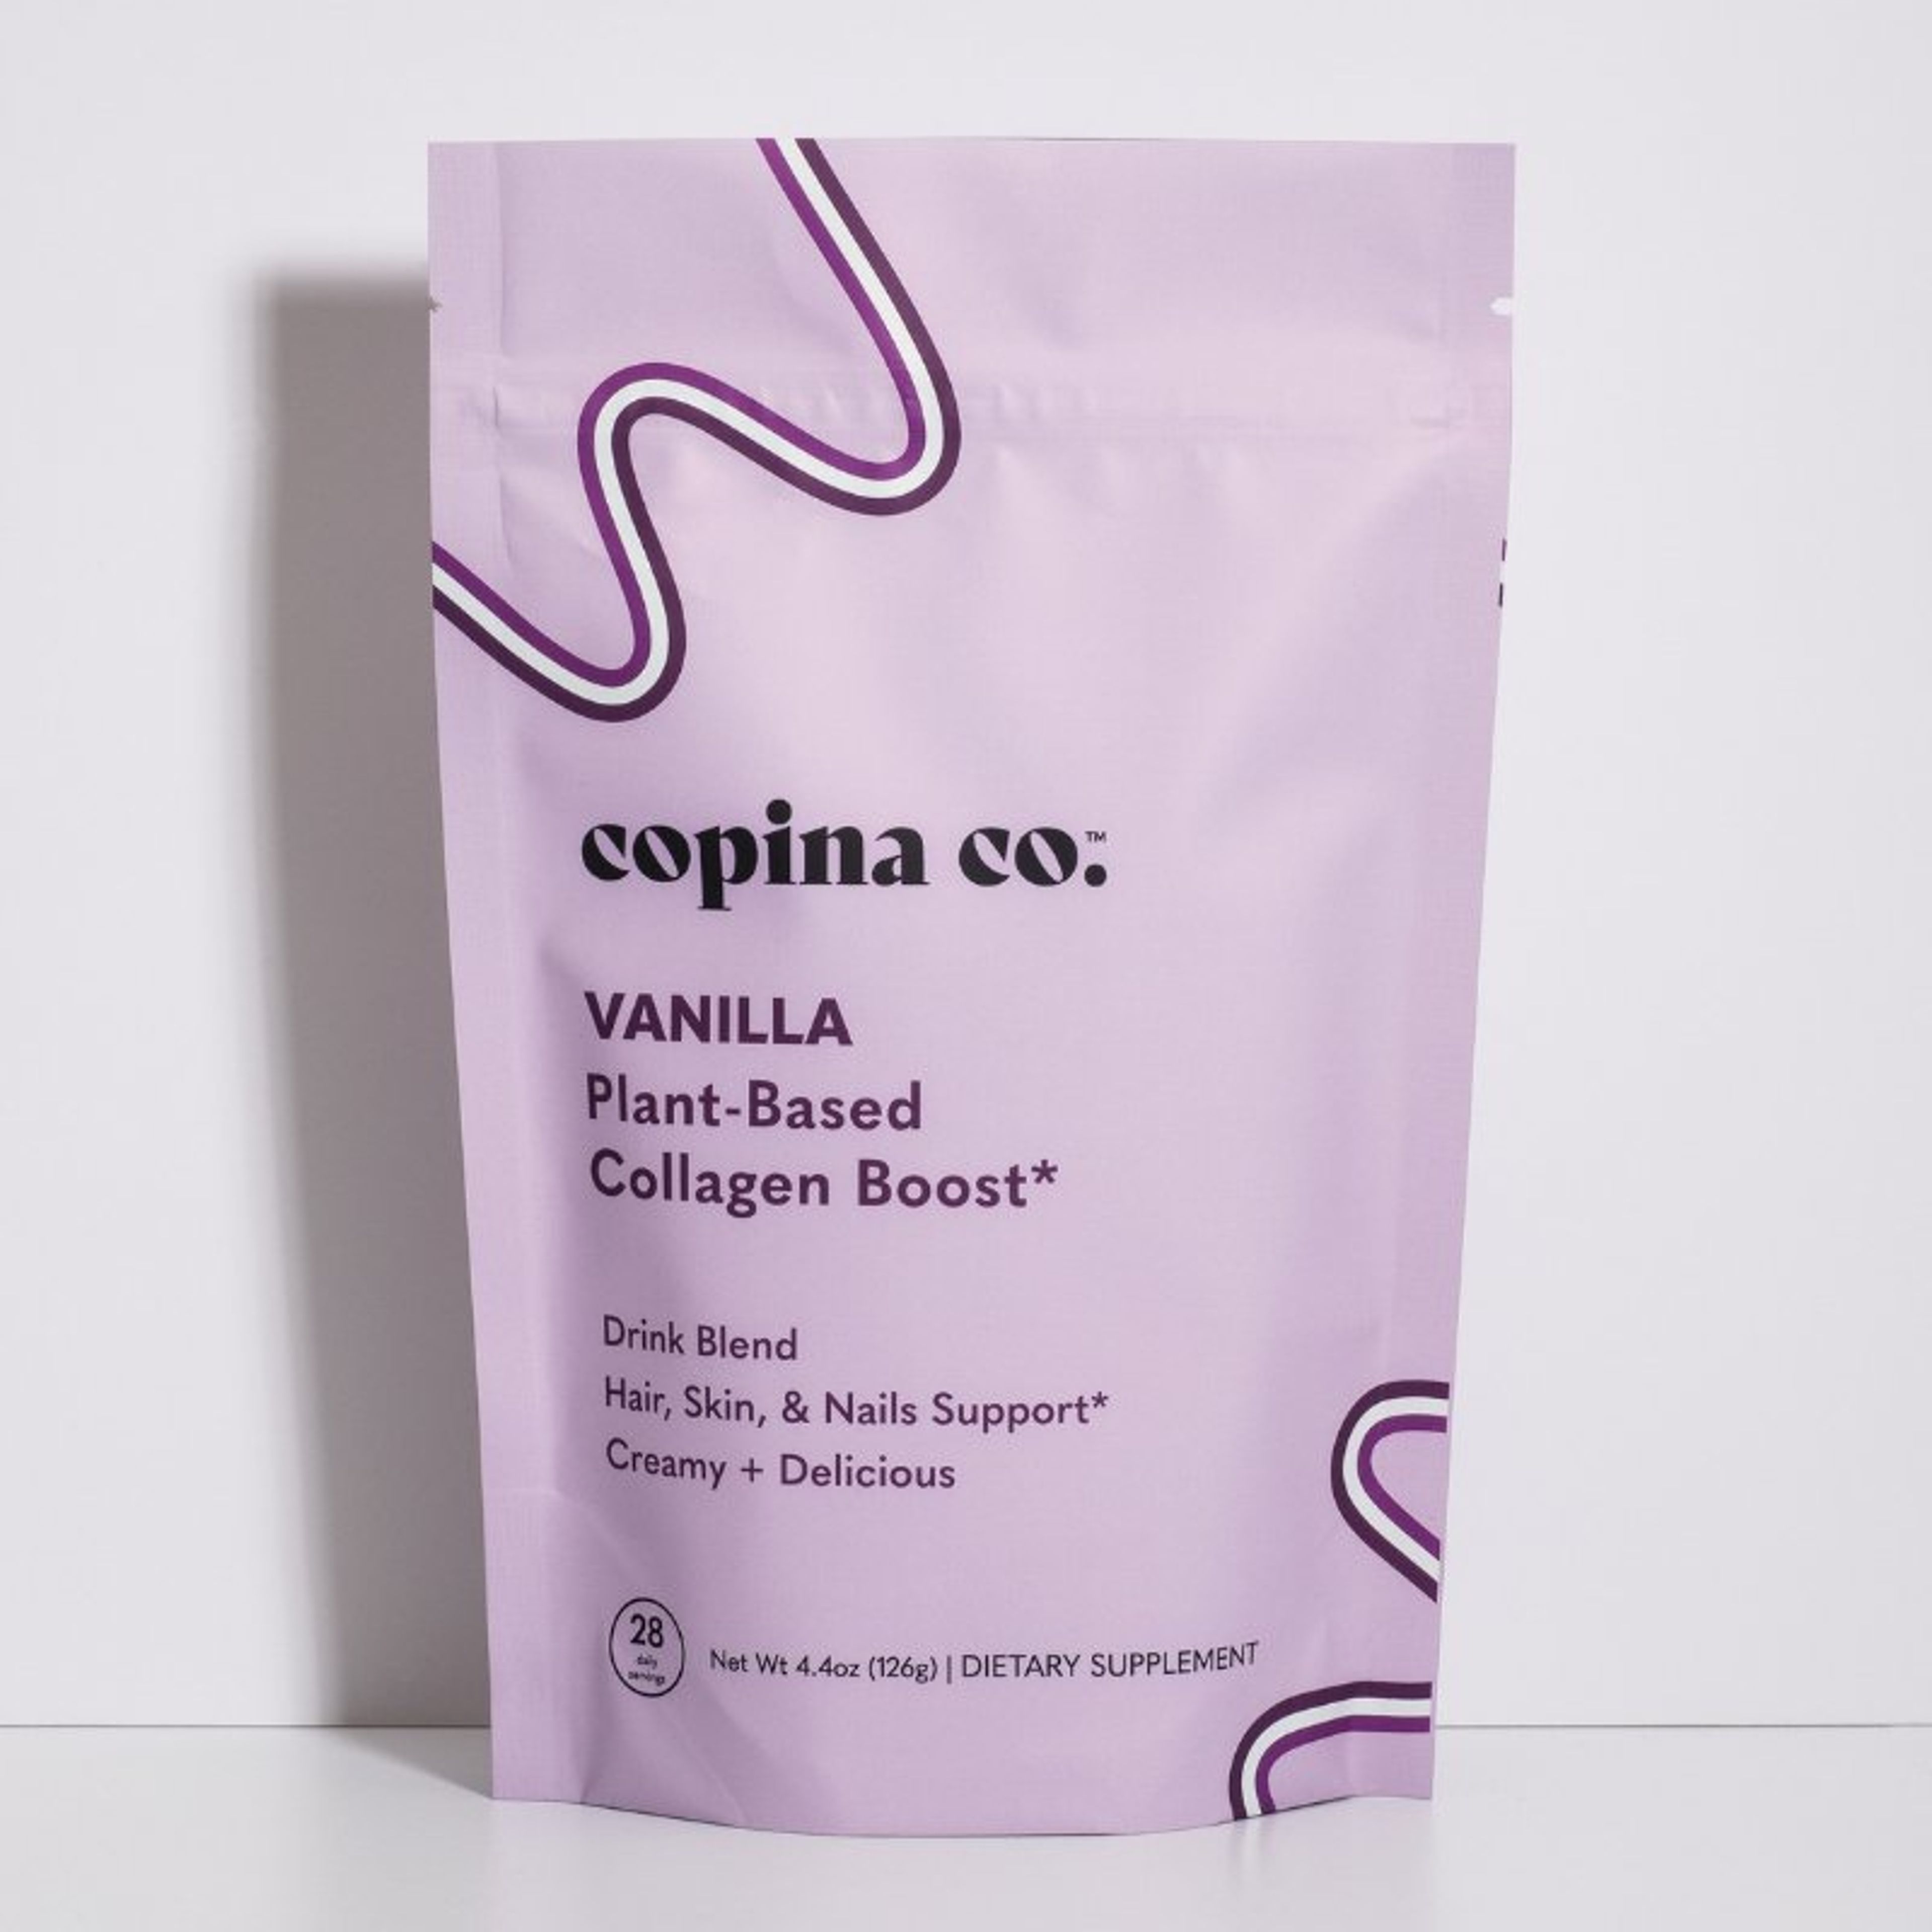 Best-Sellers Trio Plant-Based Collagen Boost Drink Blend Variety Pack